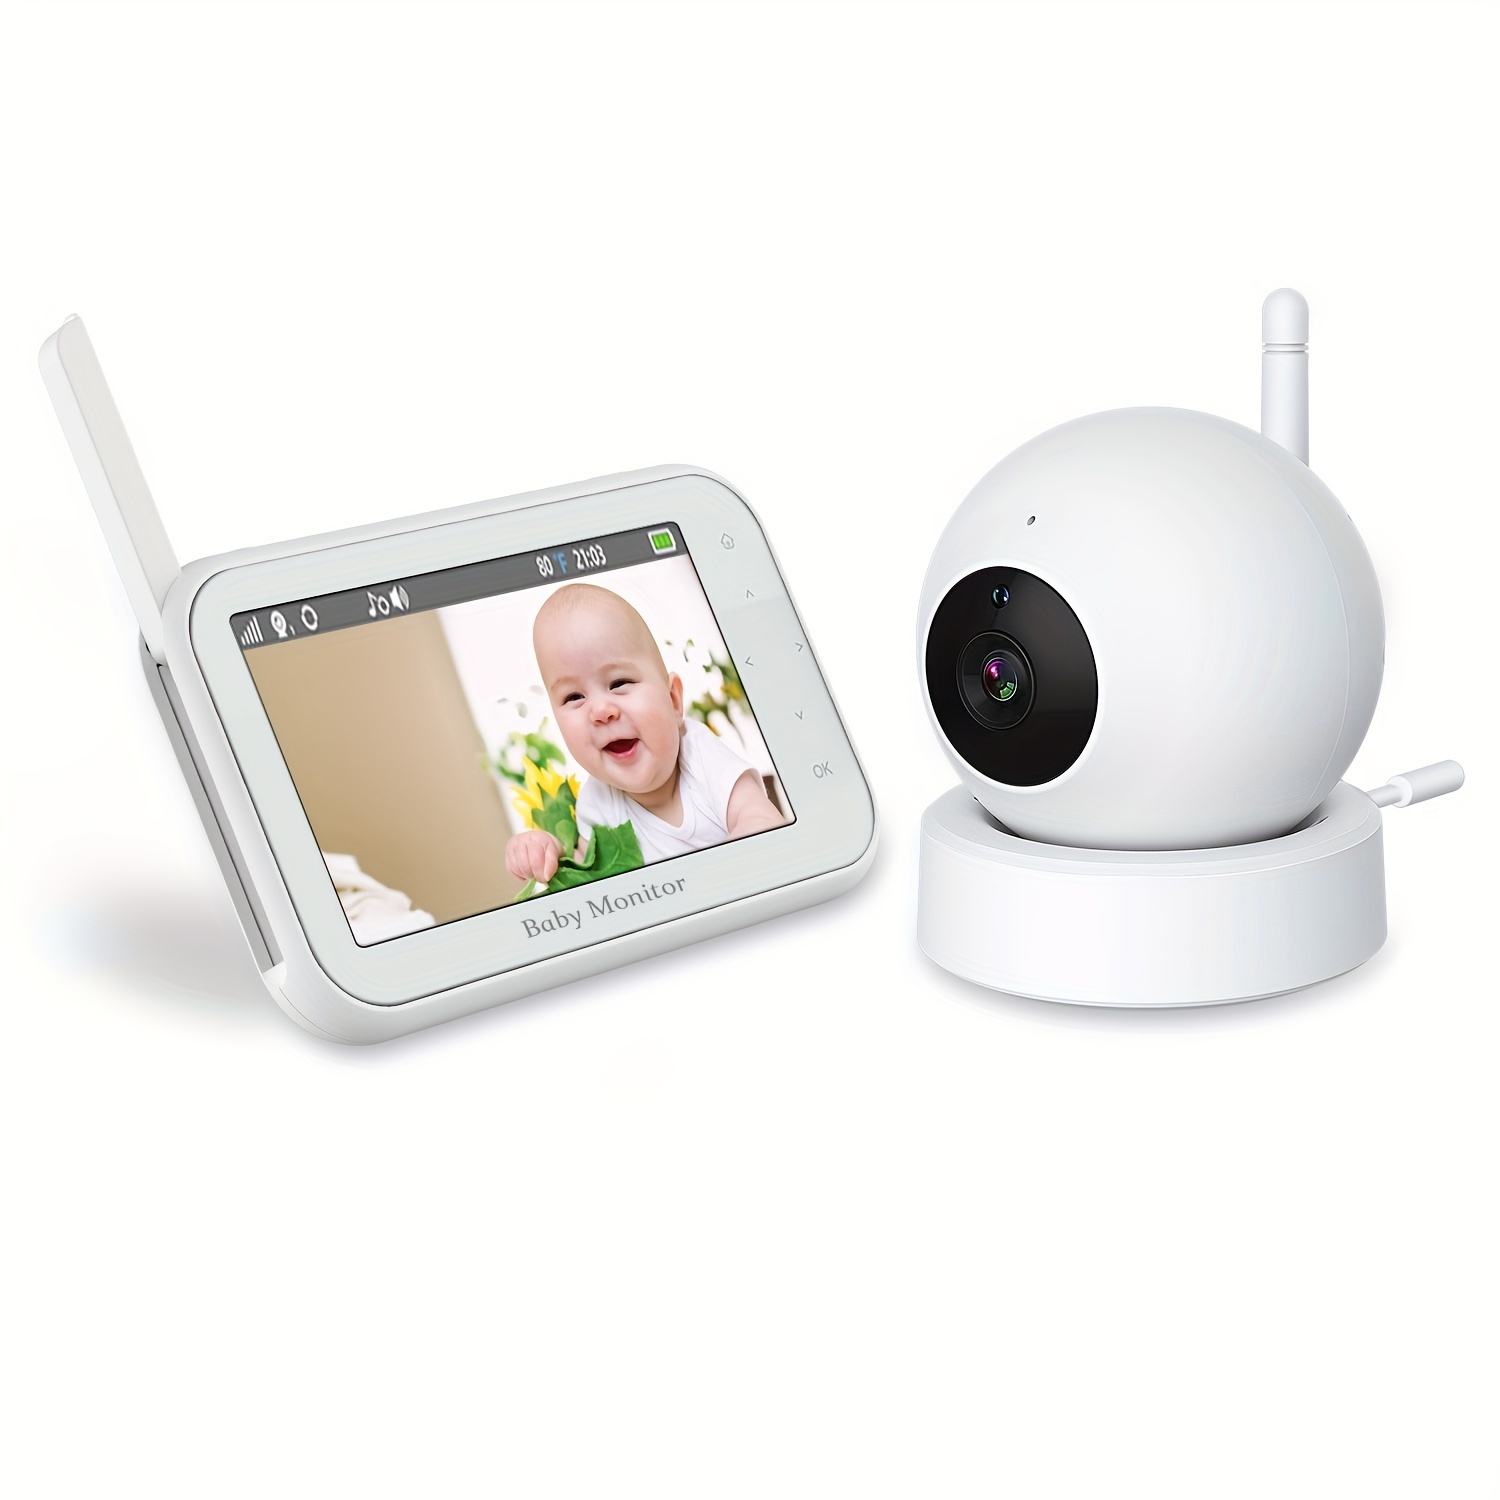 babyphone camera ghb - Buy babyphone camera ghb with free shipping